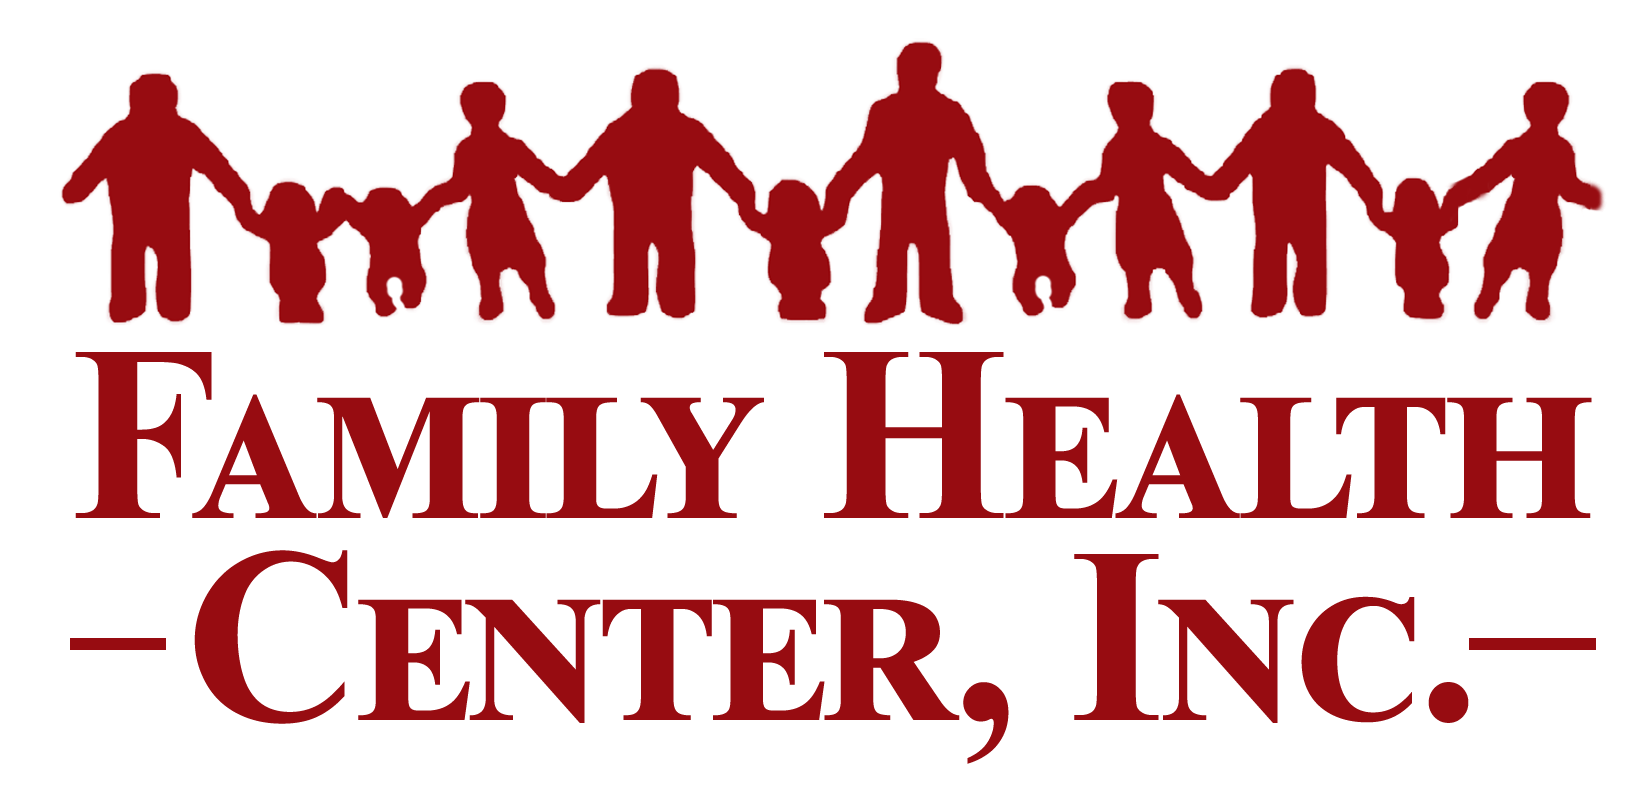 Family Health Center, Inc.